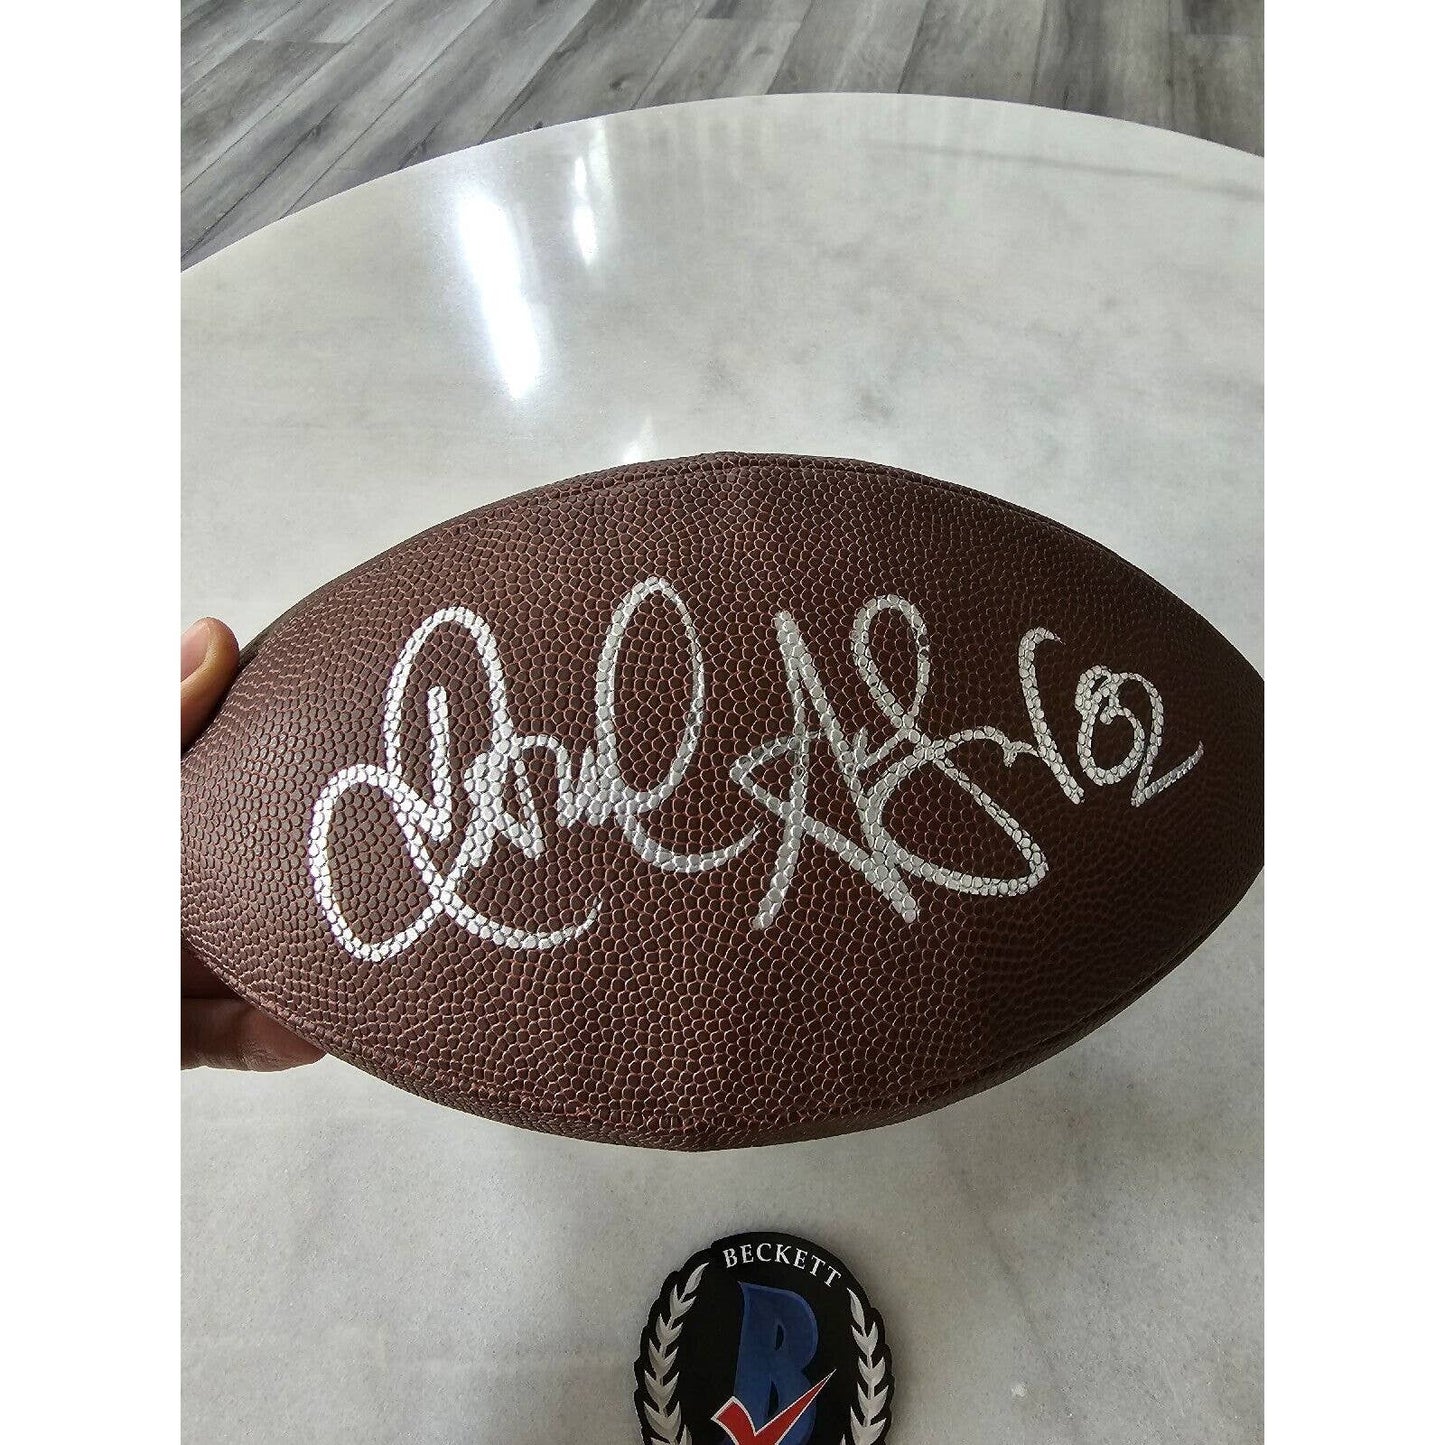 Jamal Anderson Autographed/Signed Football Beckett COA Atlanta Falcons